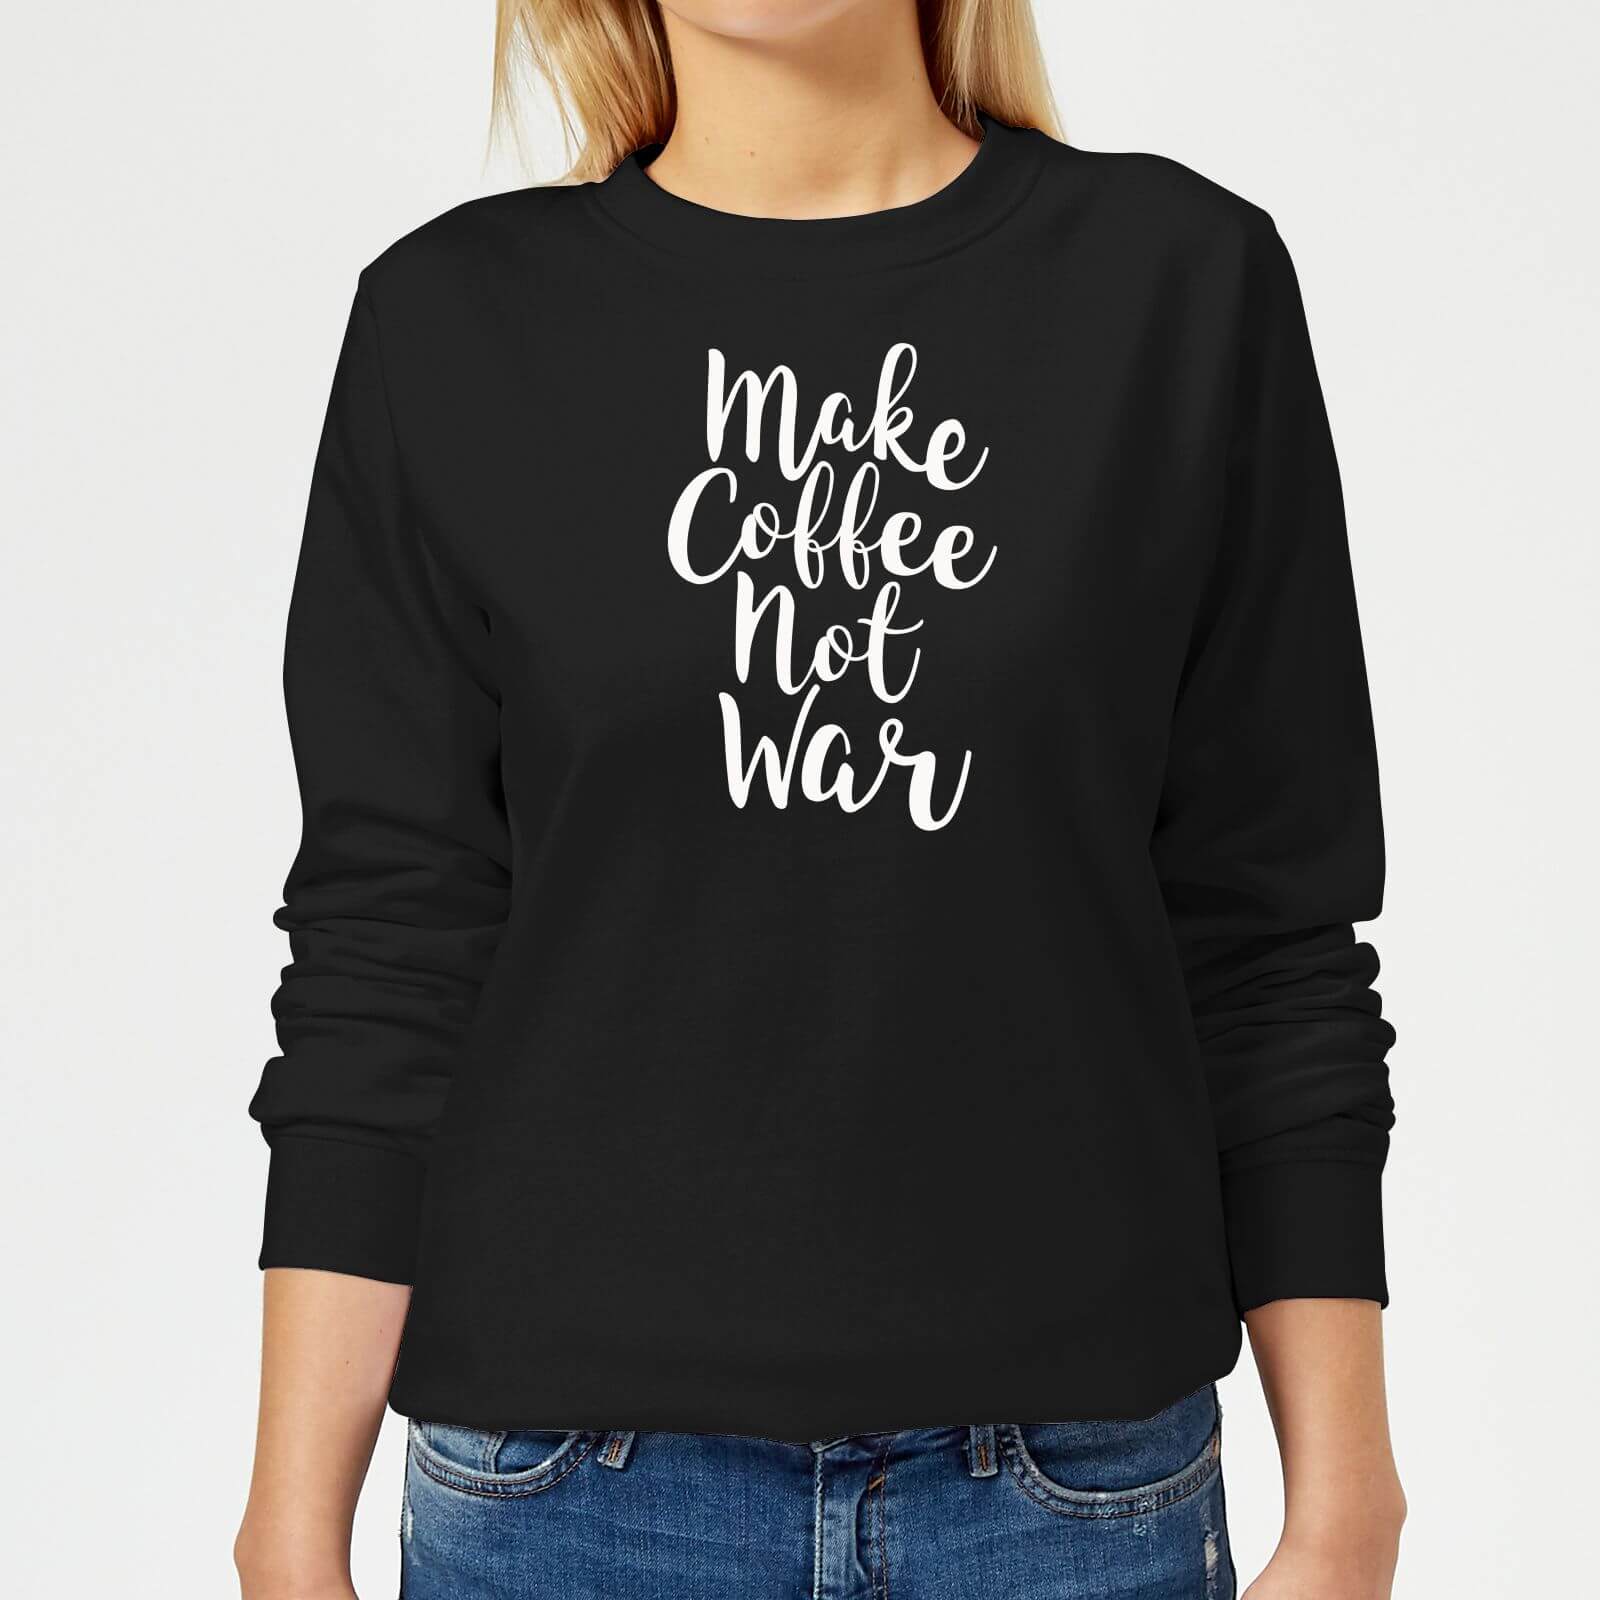 Make Coffee Not War Women's Sweatshirt - Black - XL - Black